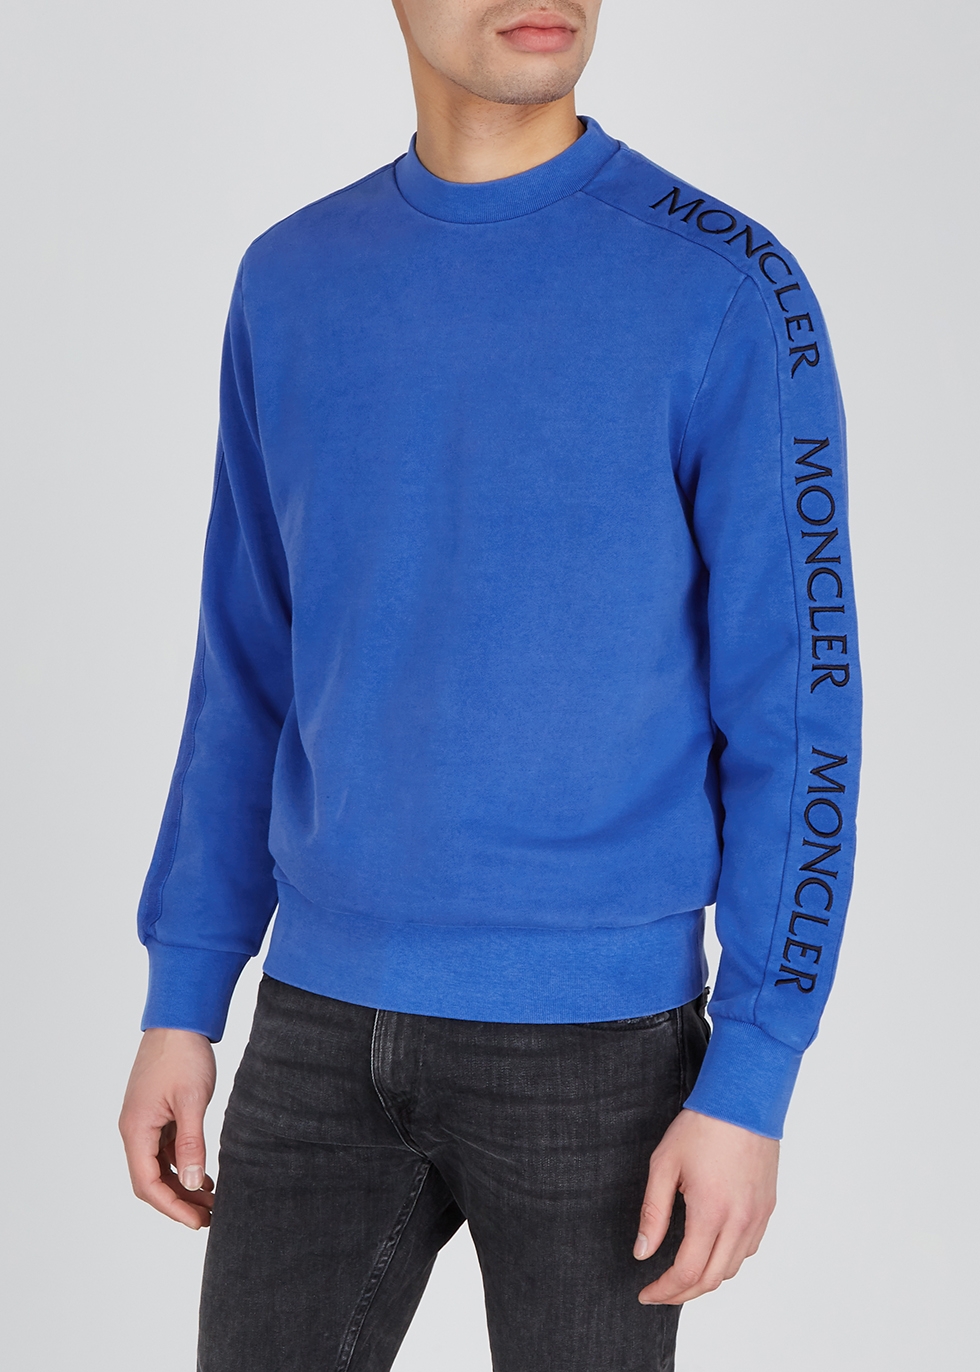 moncler sweatshirt blue